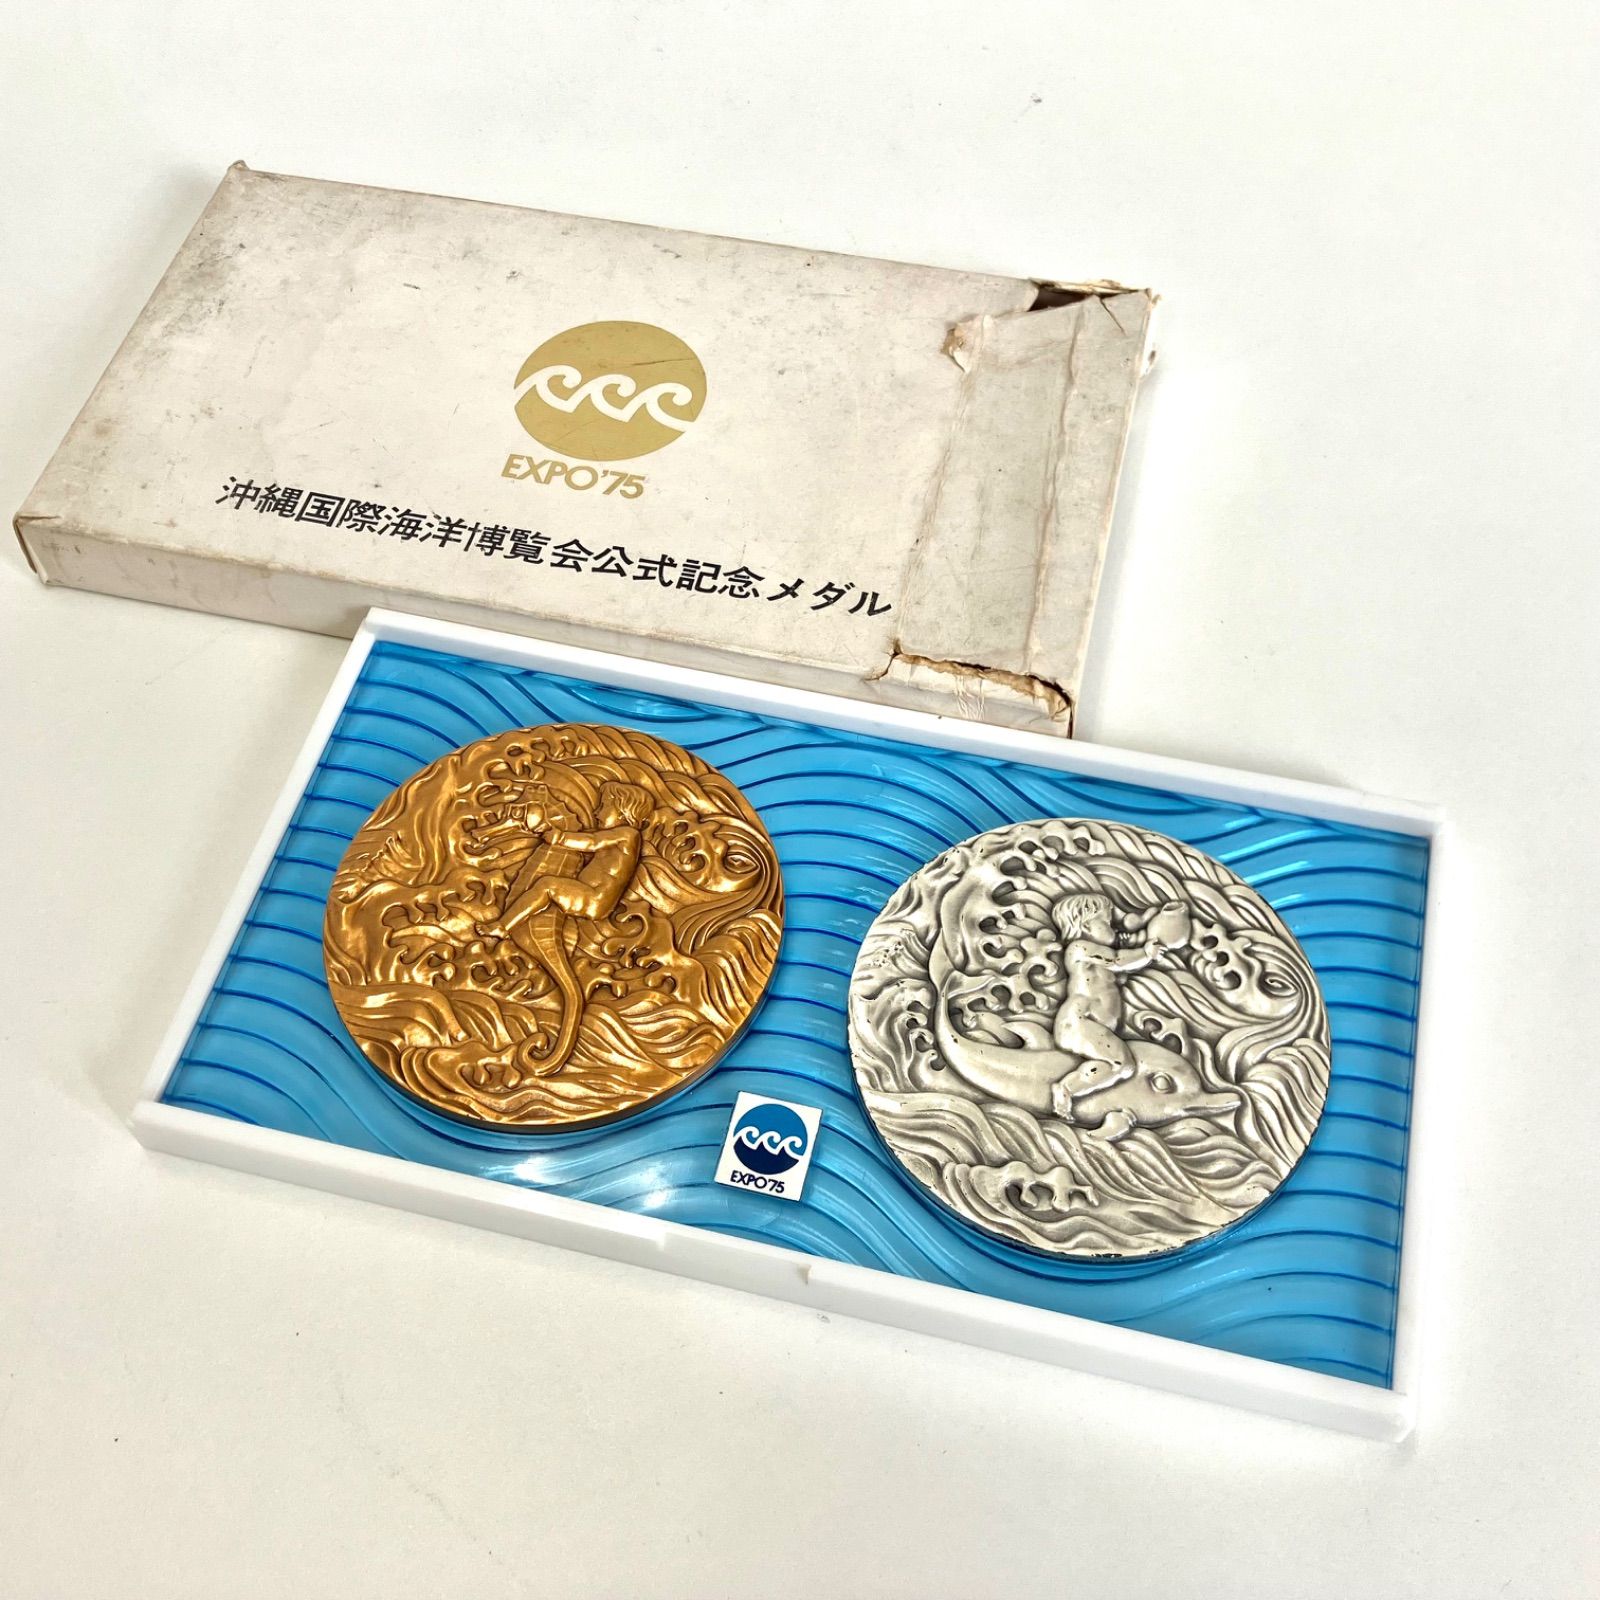 沖縄国際海洋博覧会公式記念メダル EXPO'75約160g発行 - pure-home.eu